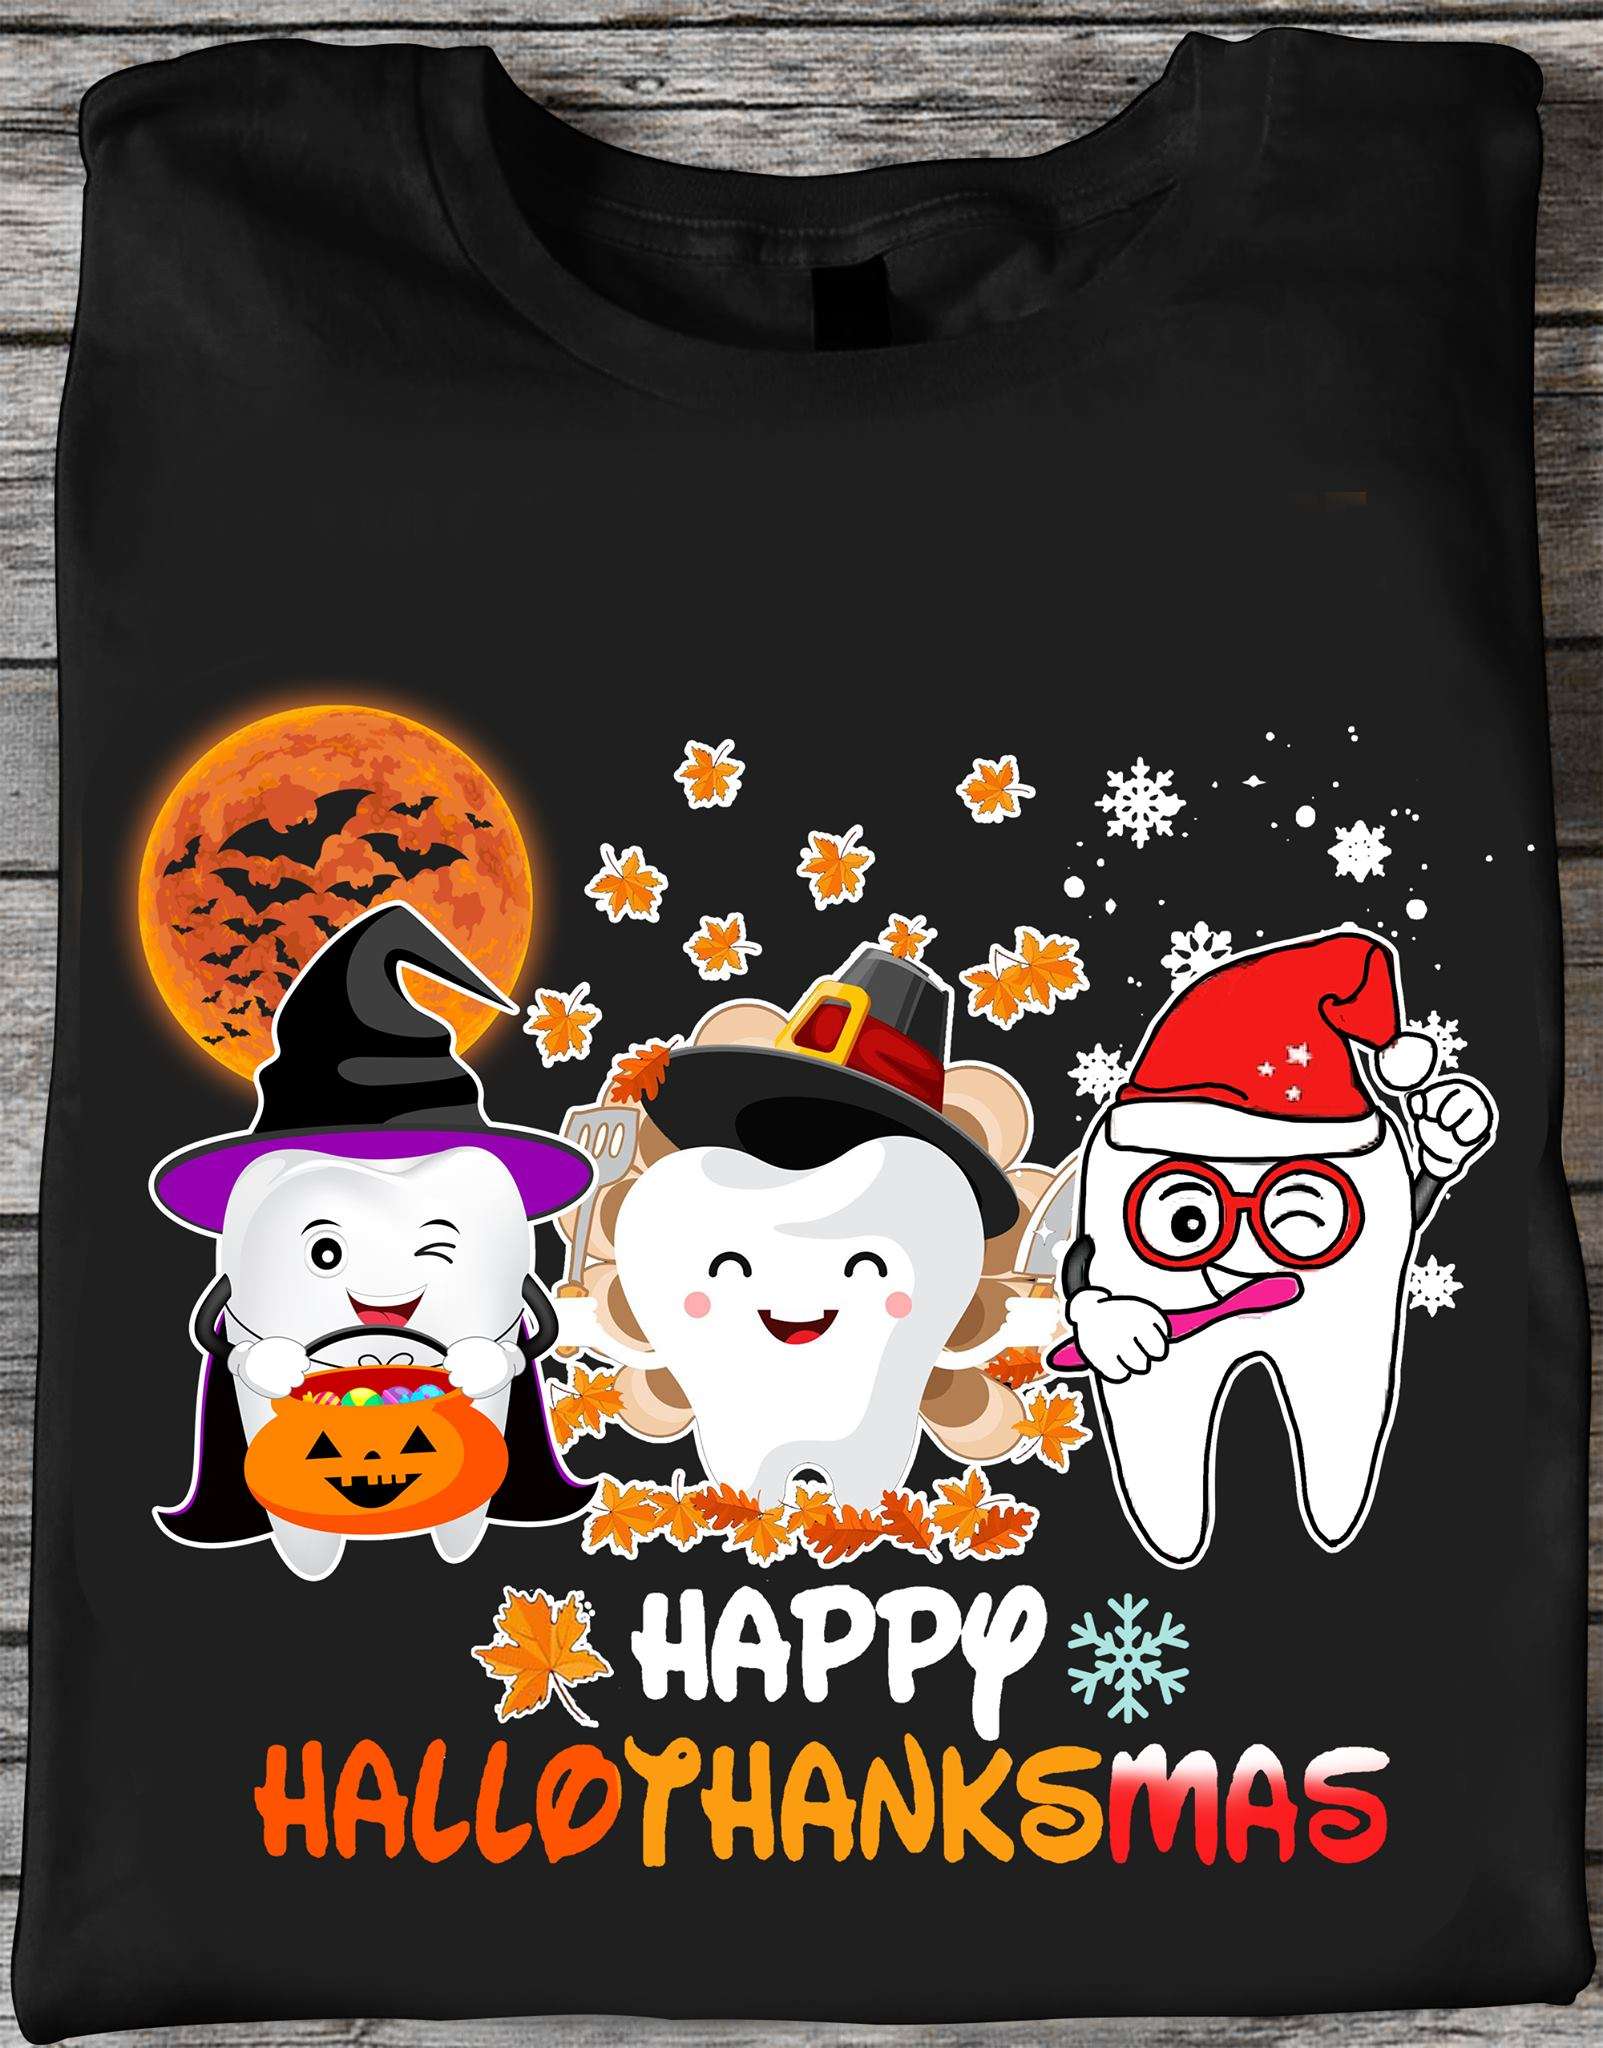 Happy HalloThankMas - Brush your teeth, teeth halloween costume